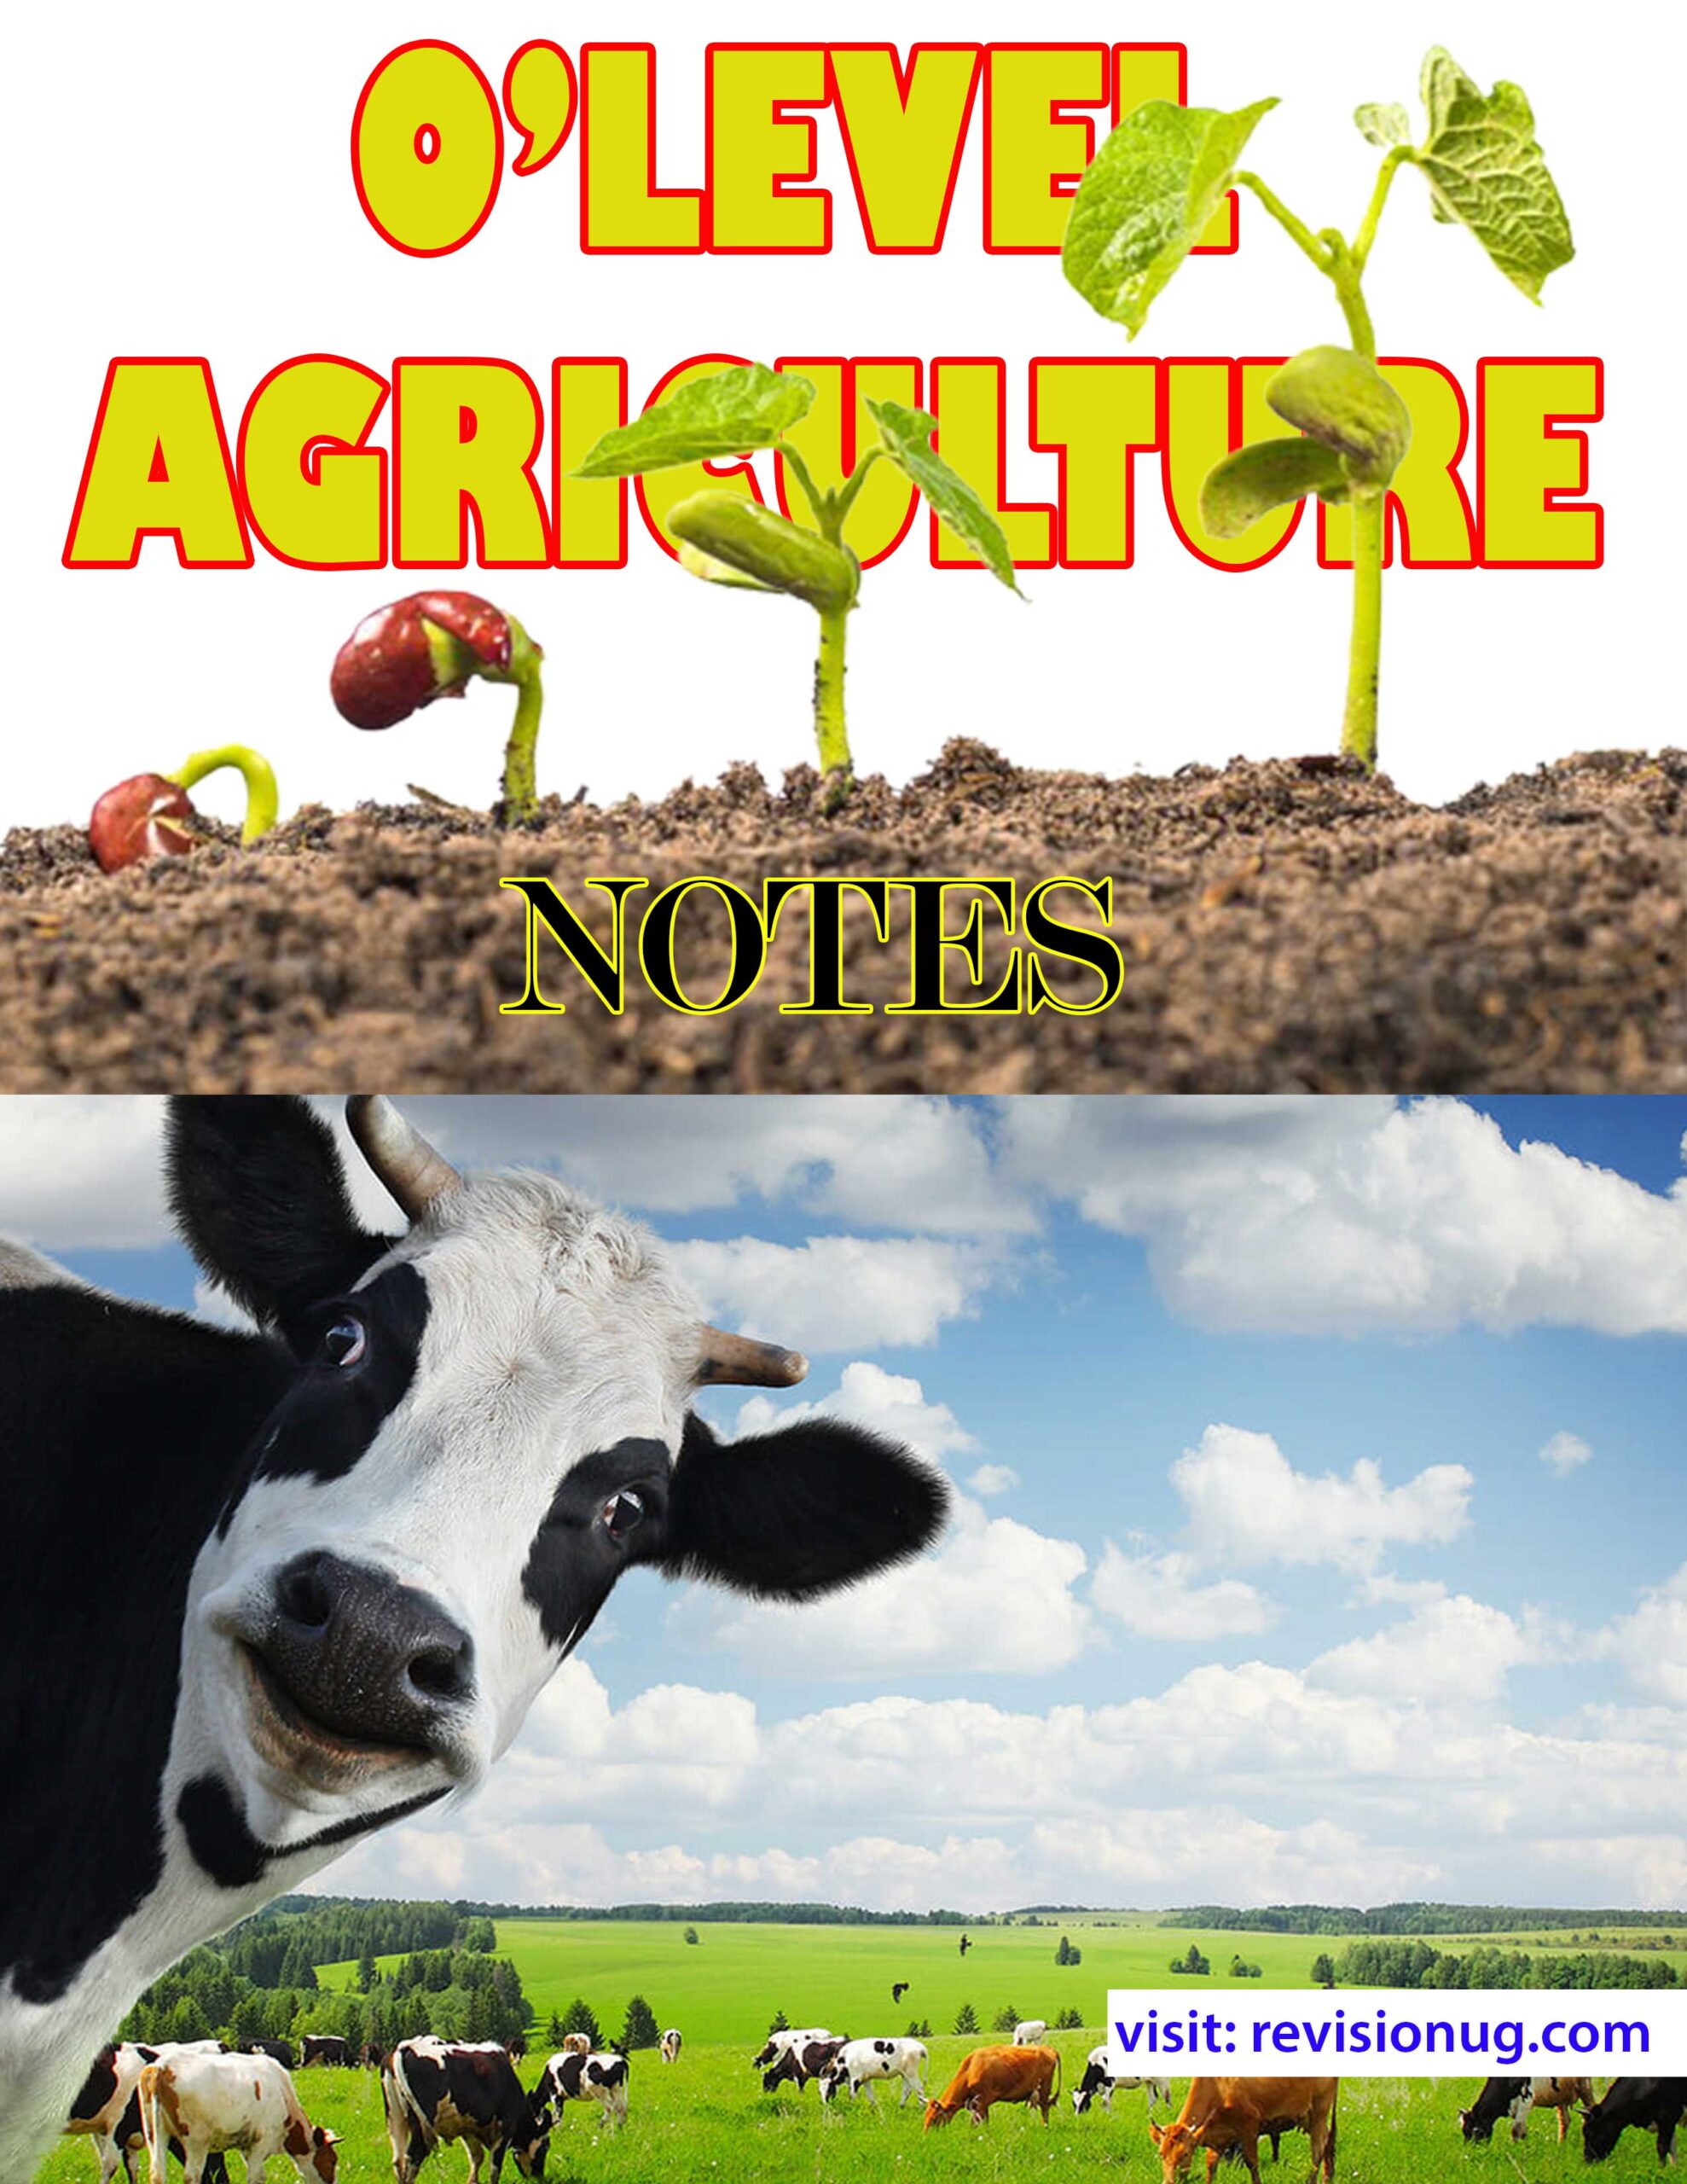 O level agriculture notes uganda